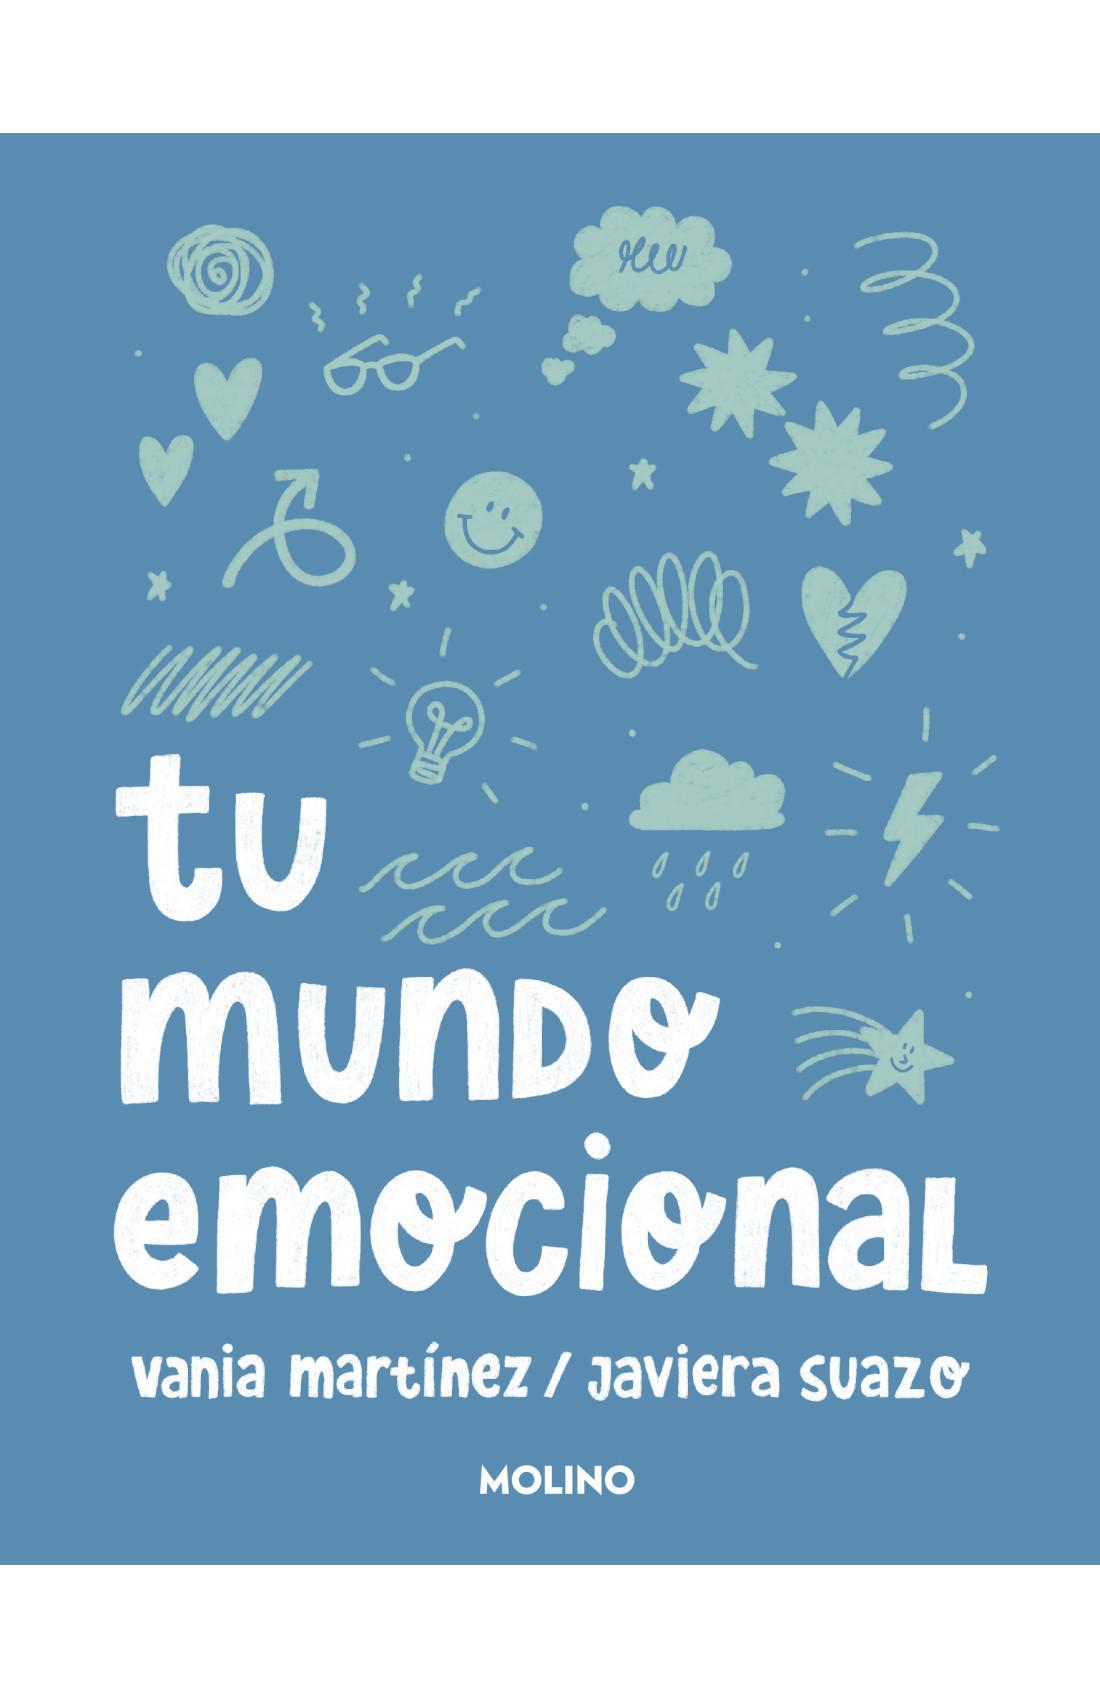 Tu mundo emocional - Vania Martínez, Javiera Suazo